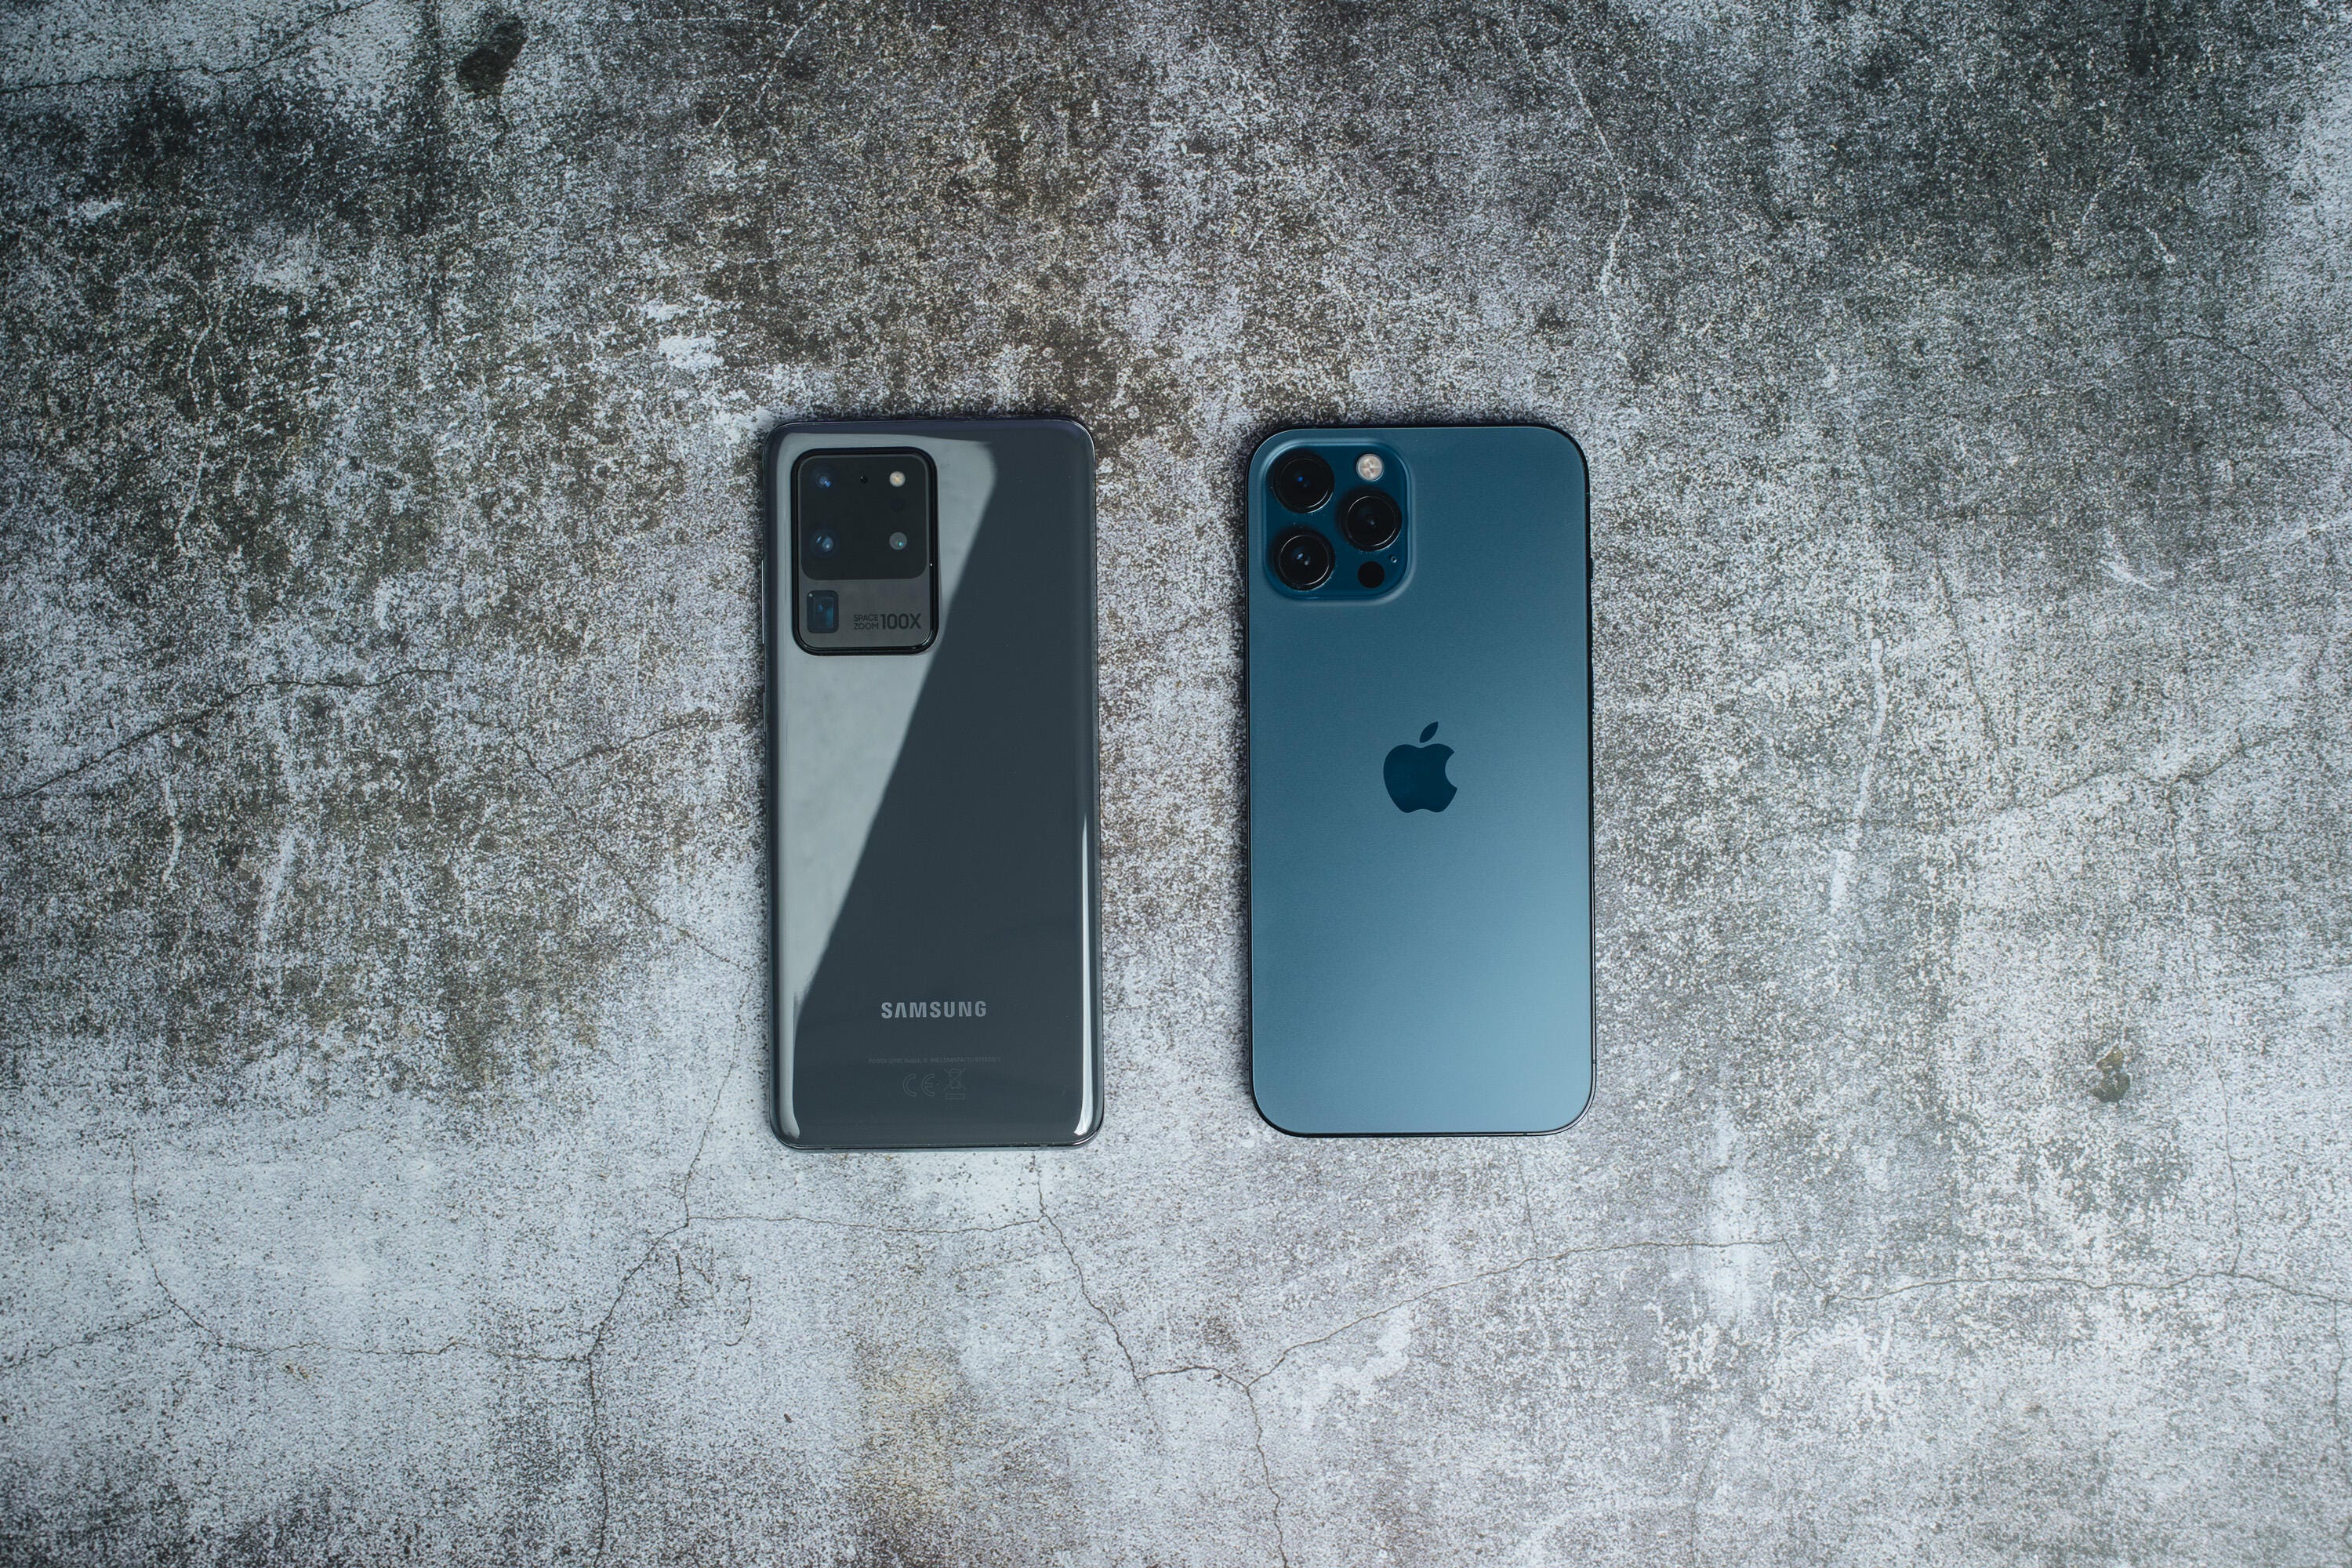 apple-iphone-12-pro-max-galaxy-s20-ultra-product-promo-hoyle-2021